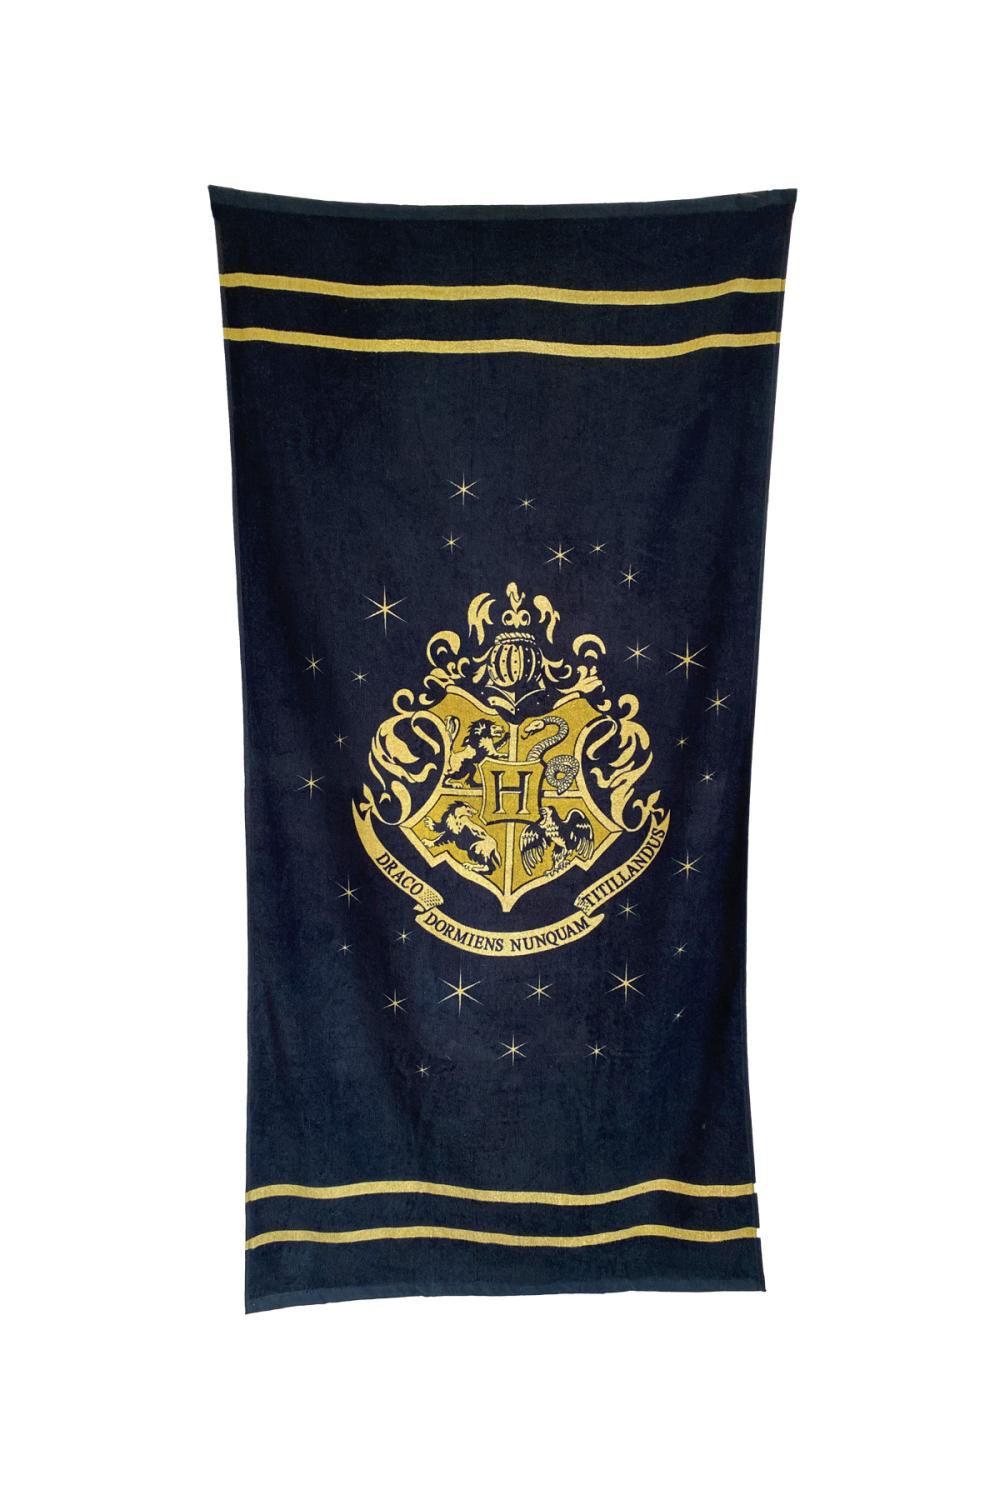 Hogwarts Gold Crest Towel 75 x 150cm